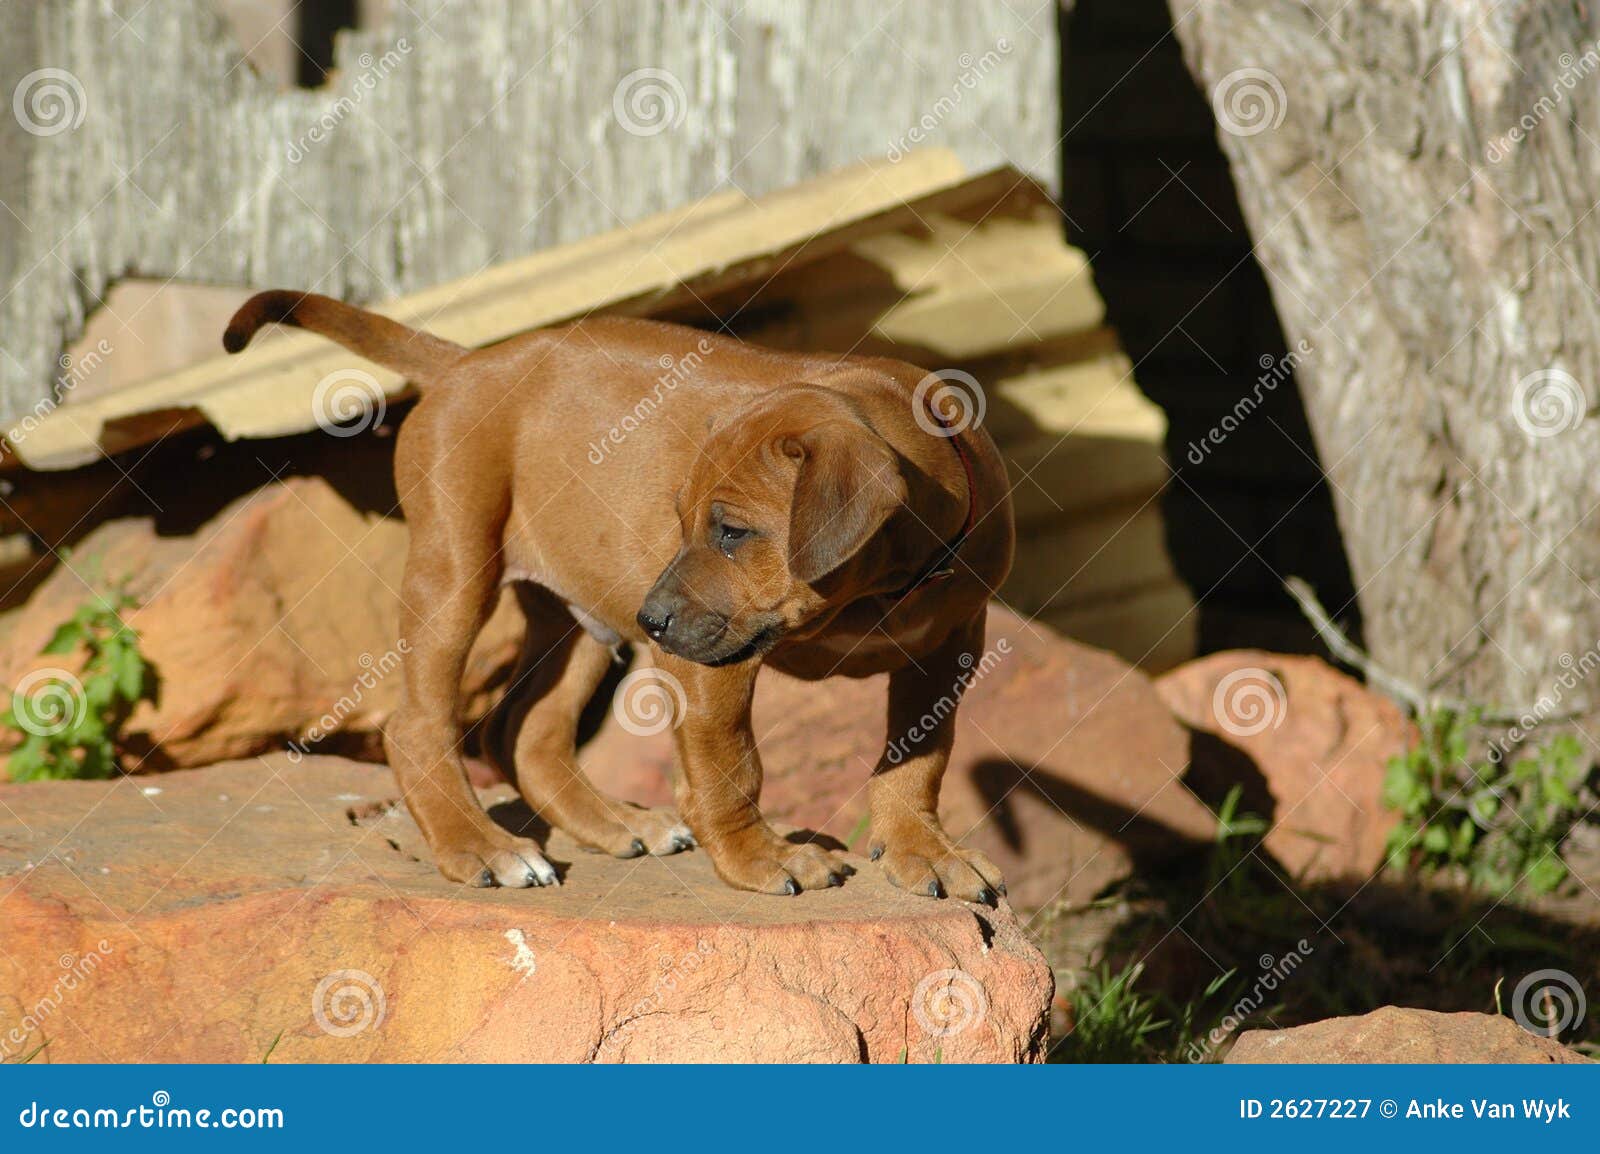 clip art rhodesian ridgeback dog - photo #1